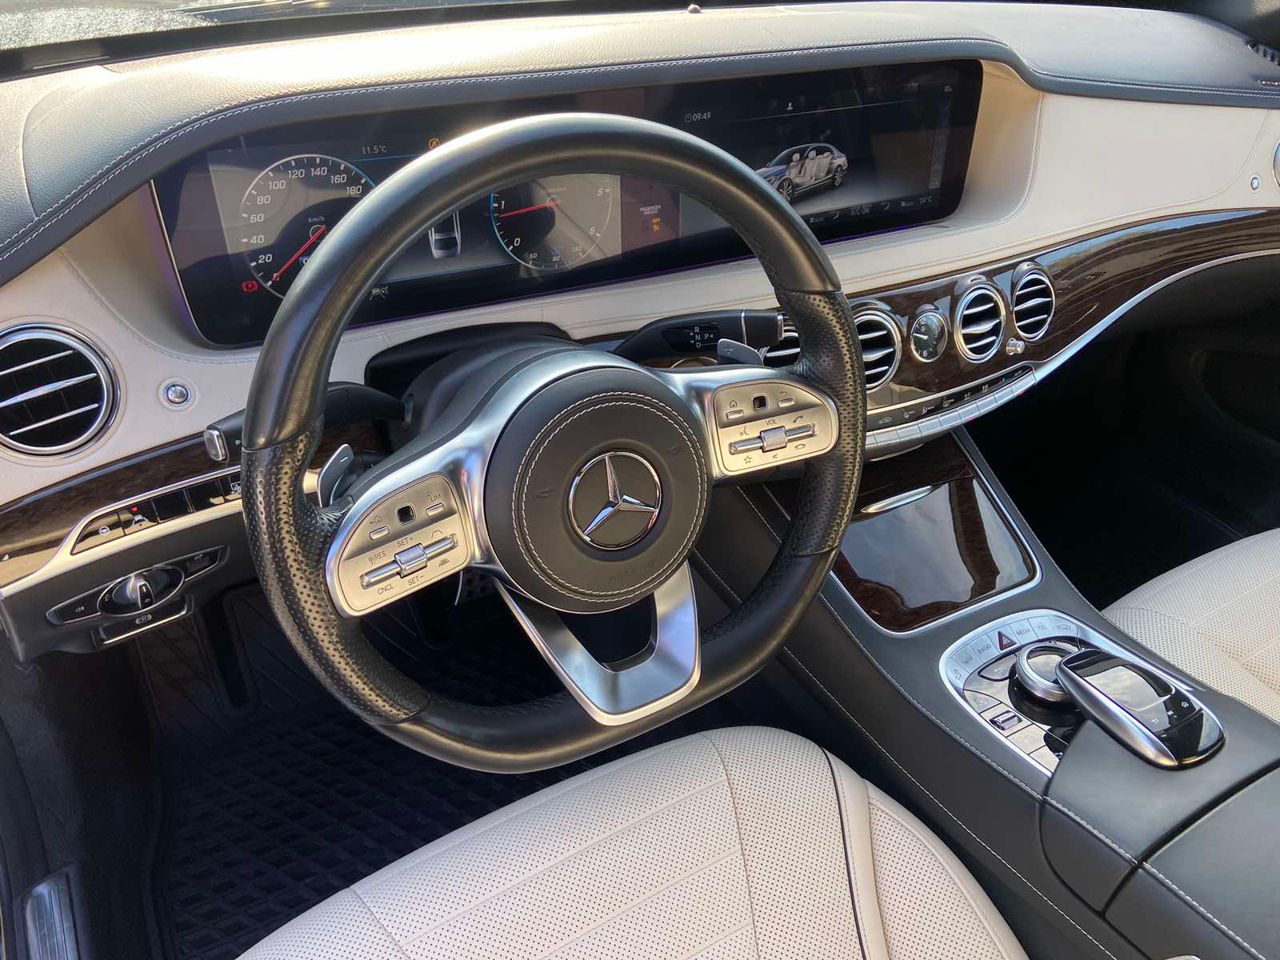 Mercedes S Class foto 11